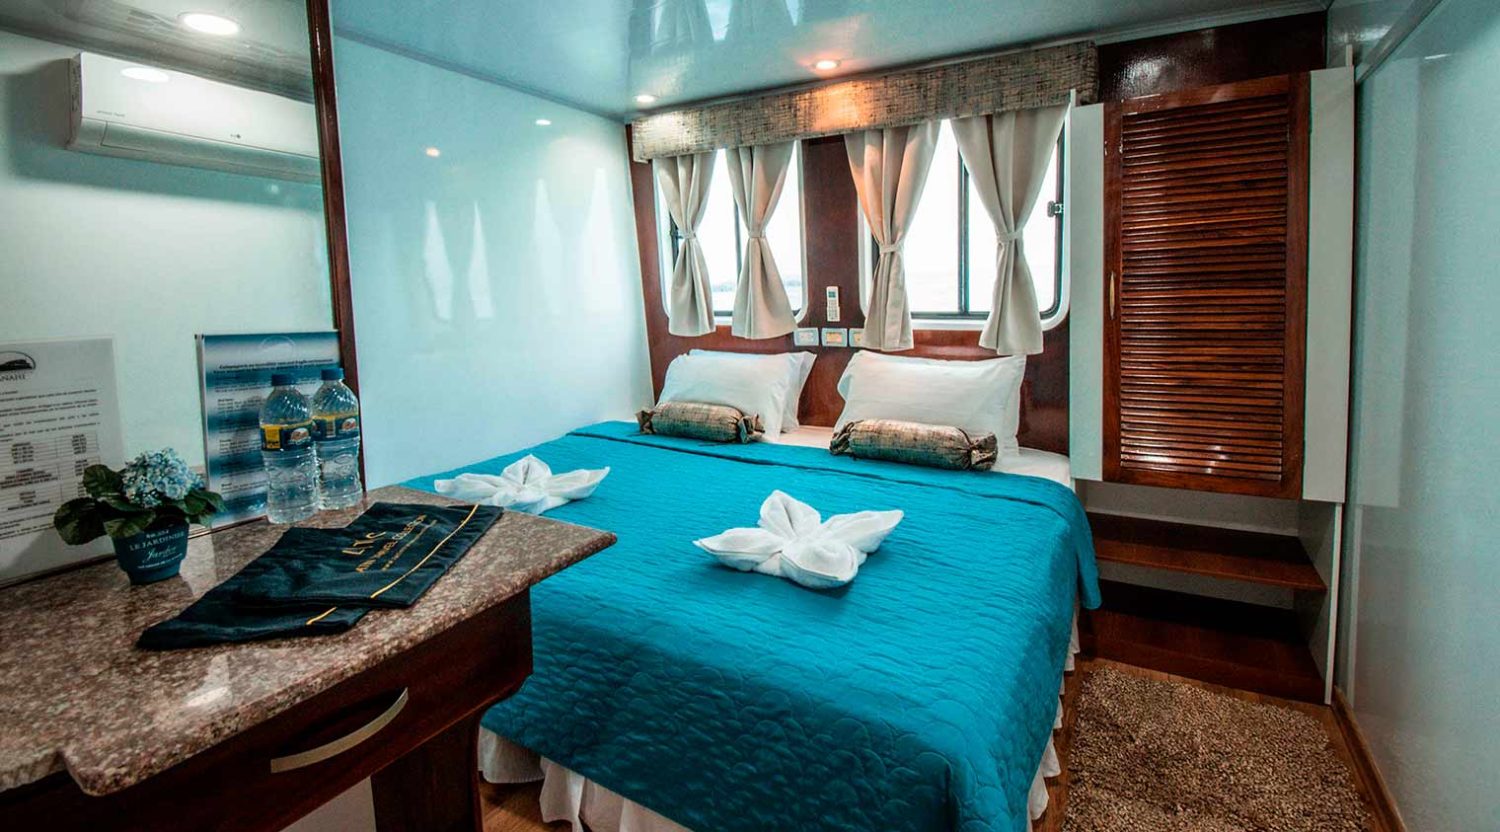 king size bed bedroom of anahi catamaran yacht of galapagos islands